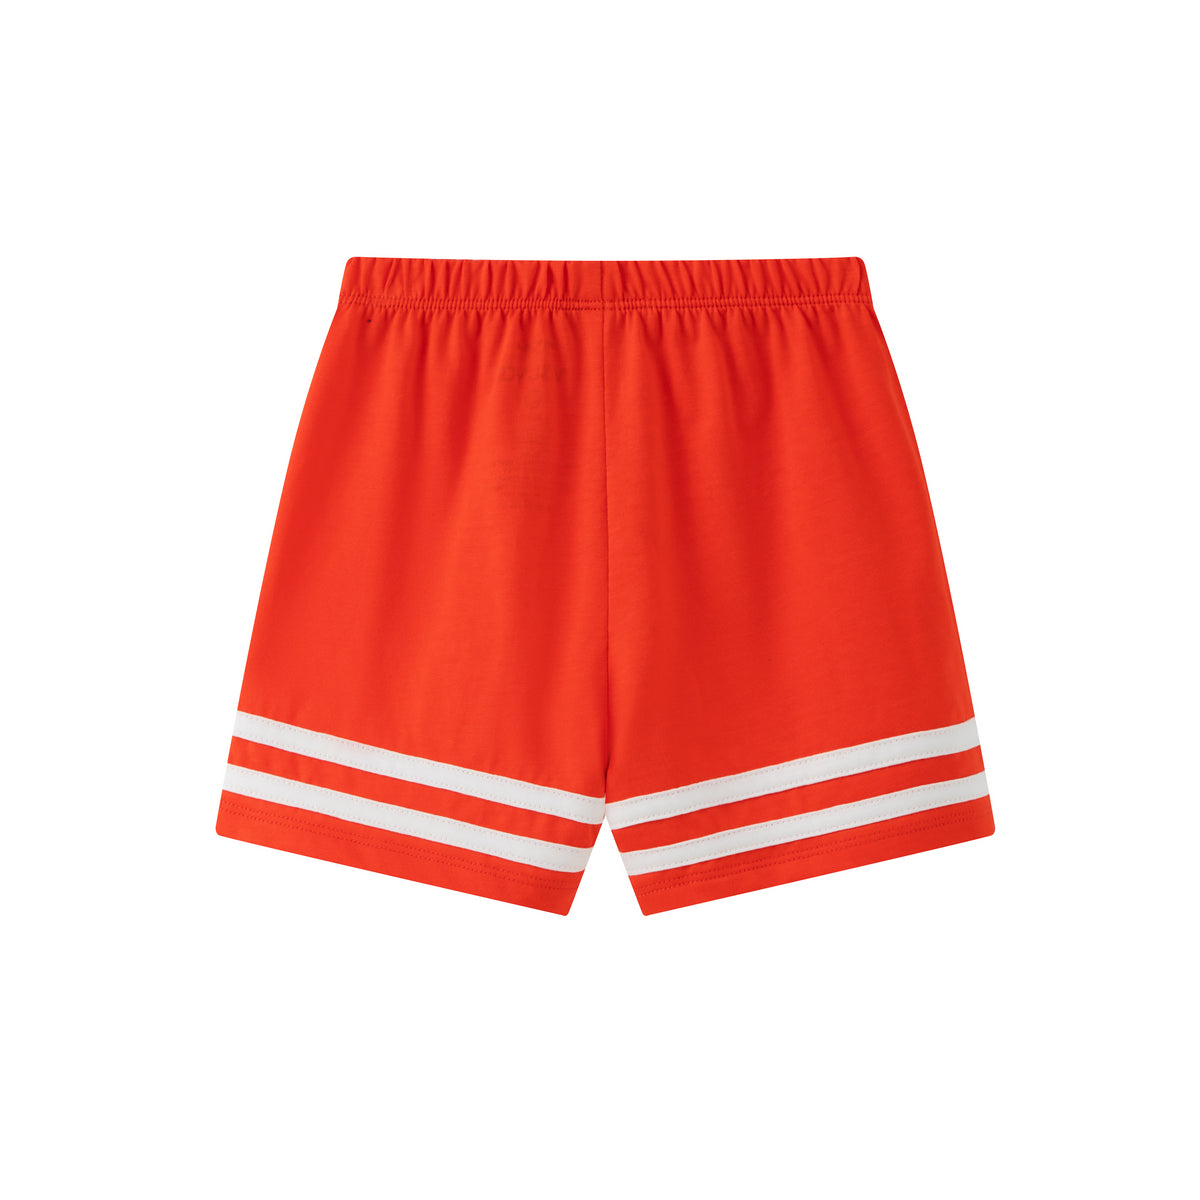 Vauva SS24 - Baby Crab Print T-Shirt & Shorts Set (Orange)